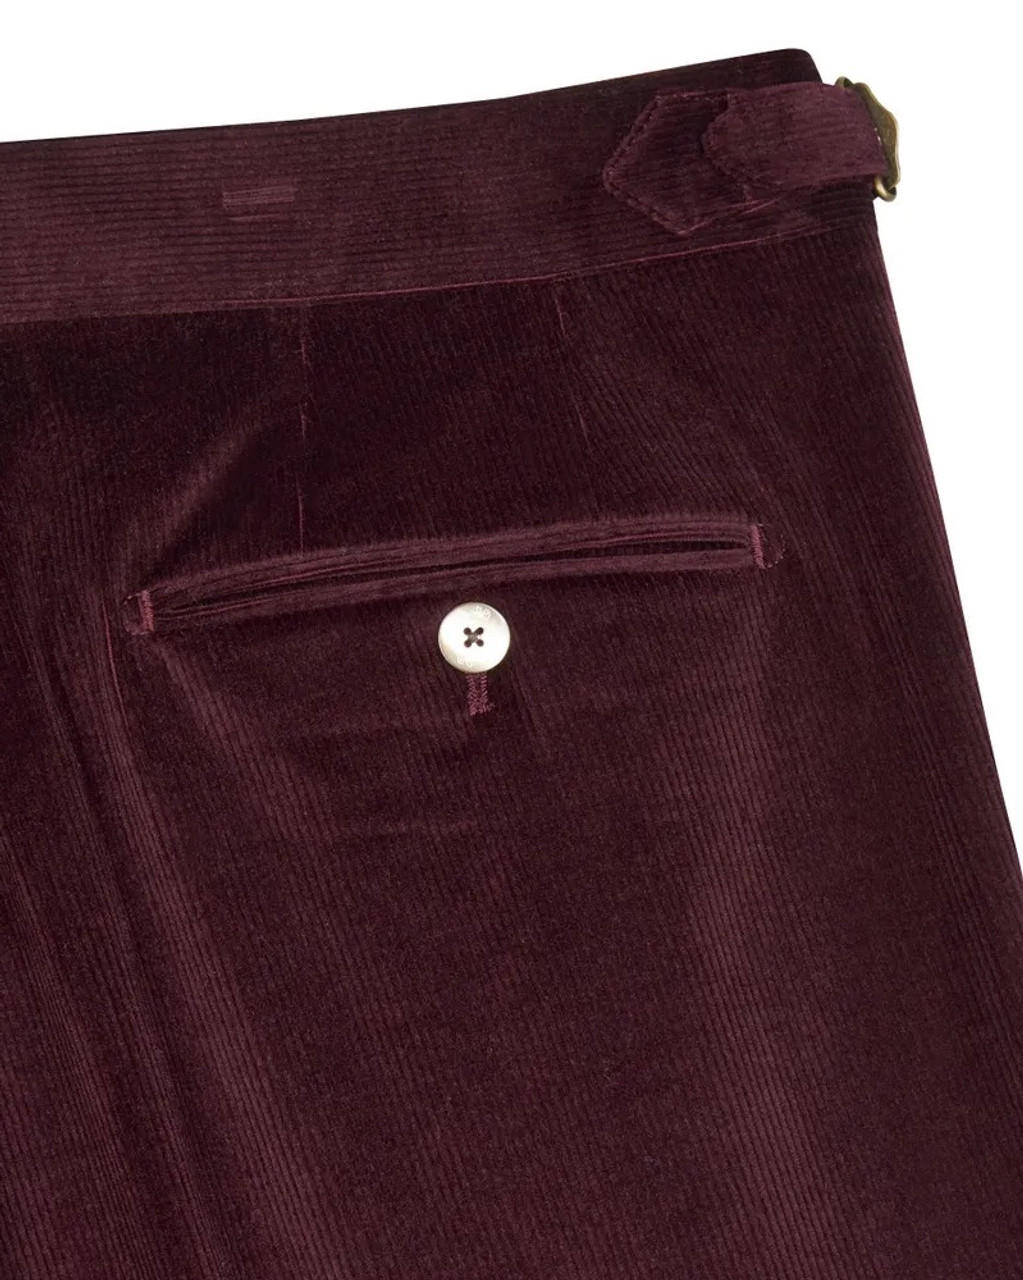 Corduroy trousers - Burgundy - Men | H&M IN